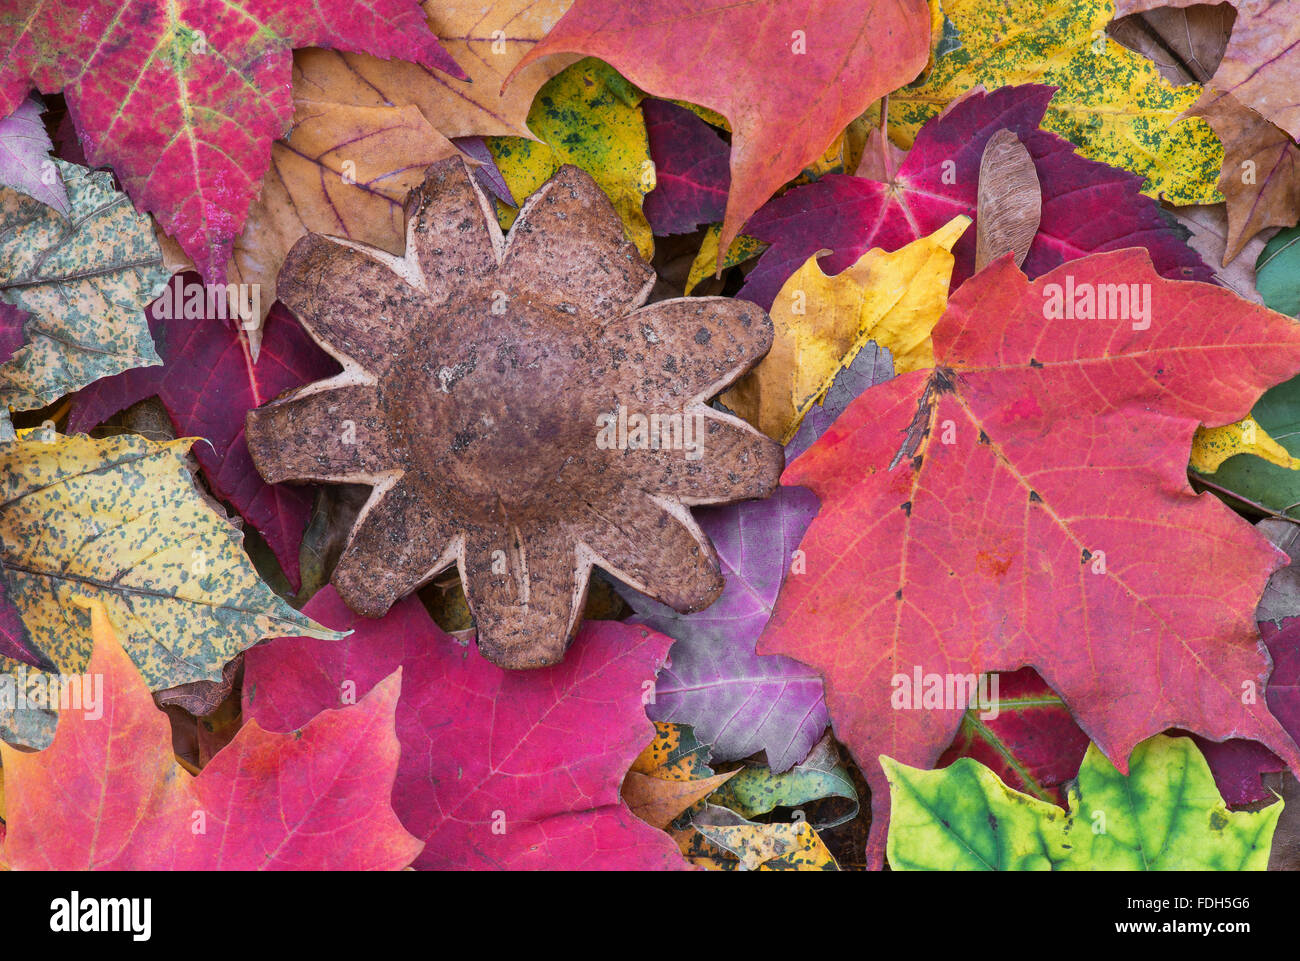 Earthstar fungus (Astraeus hygrometricus) and colored leaves on forest floor, Autumn, Eastern USA Stock Photo